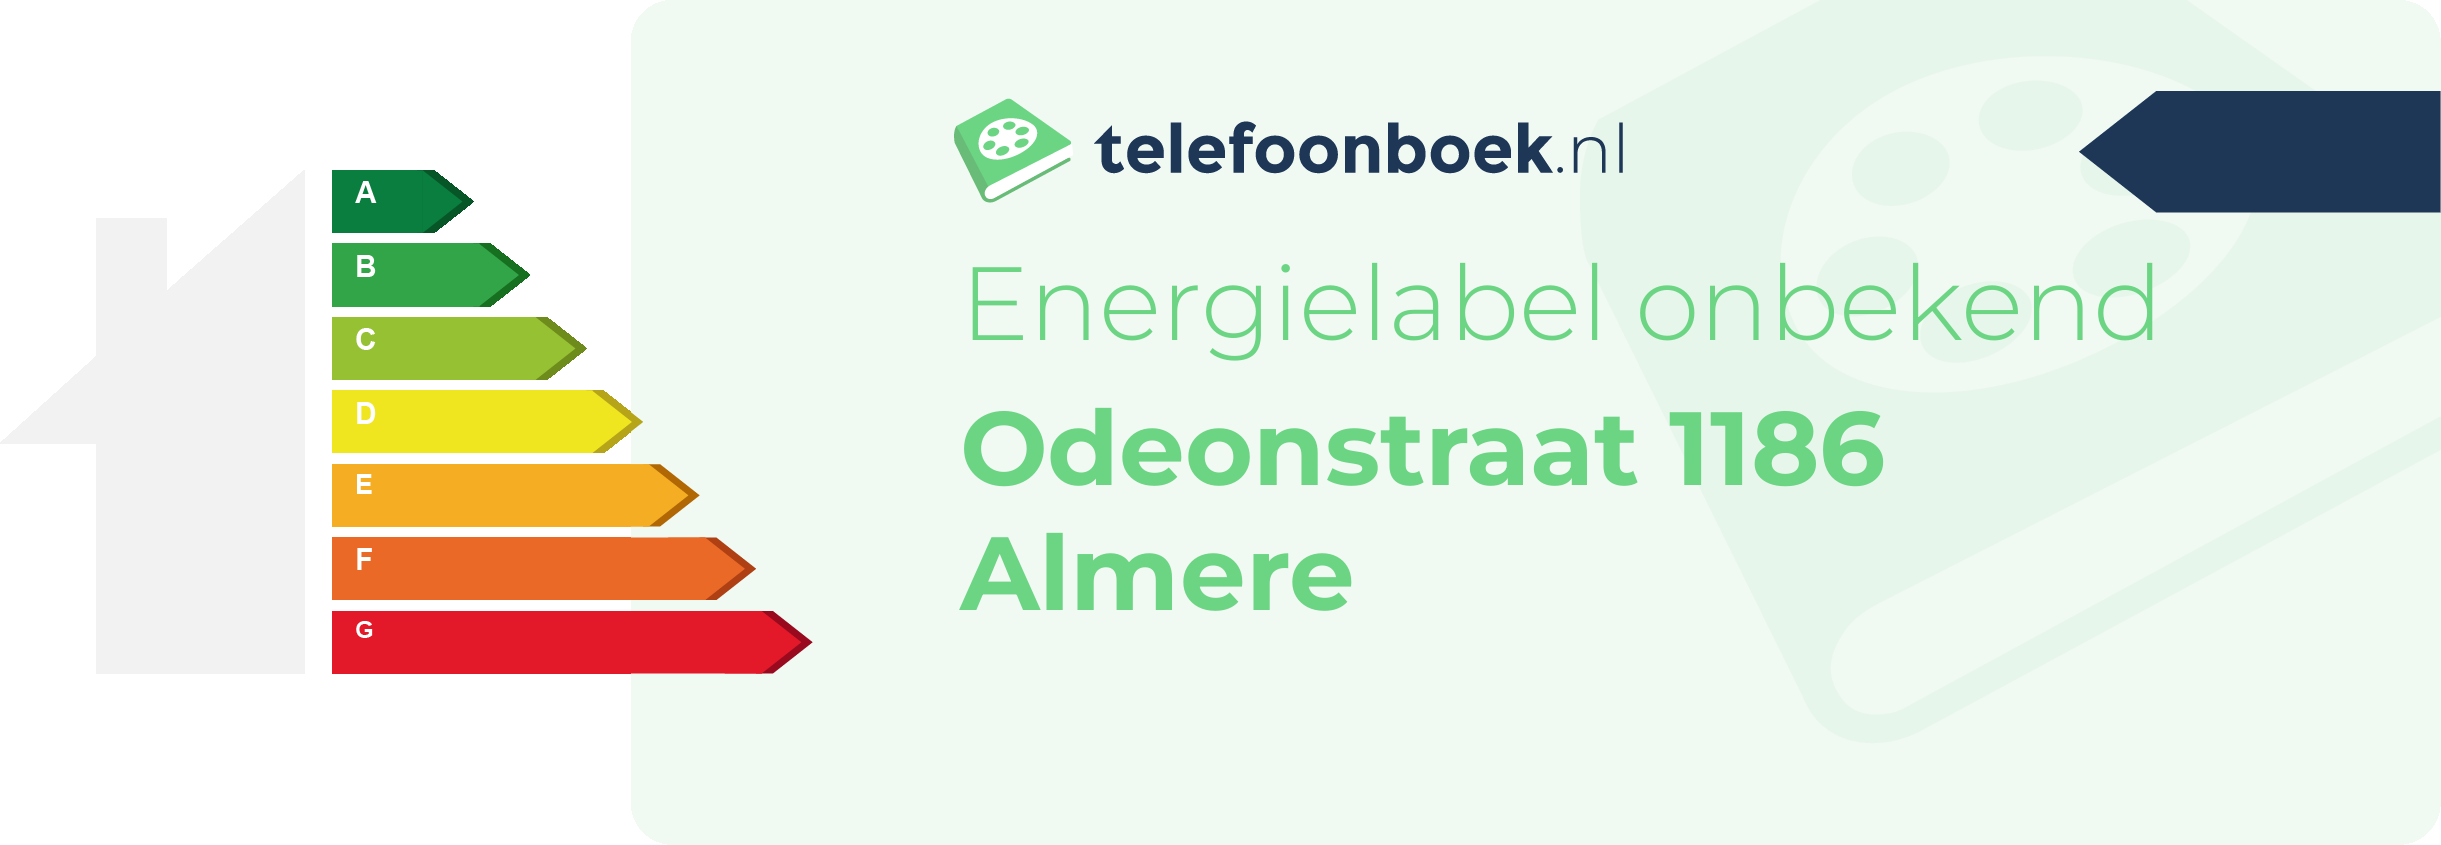 Energielabel Odeonstraat 1186 Almere